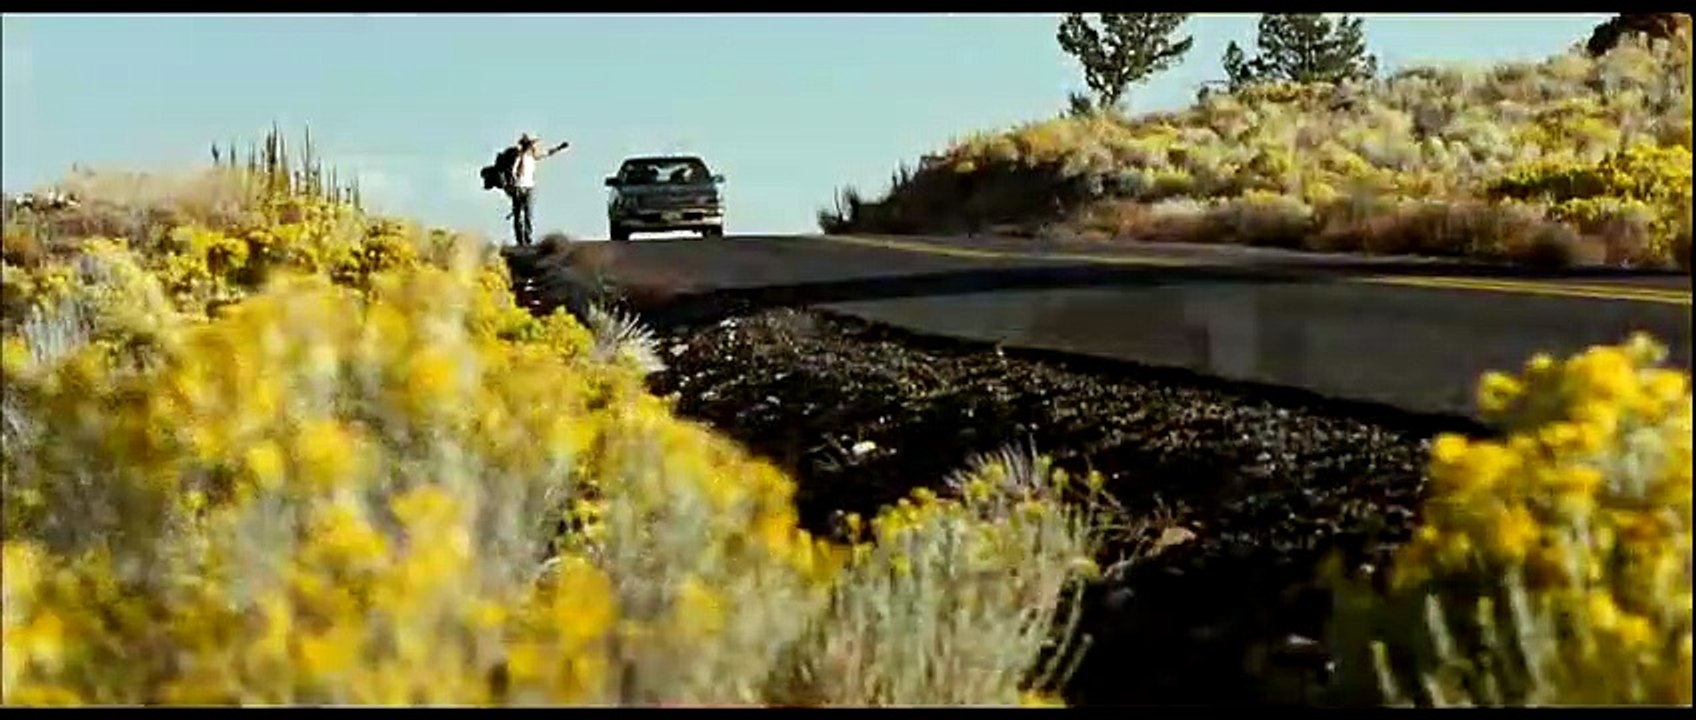 In Die Wildnis Film Trailer - Into The Wild (2008)